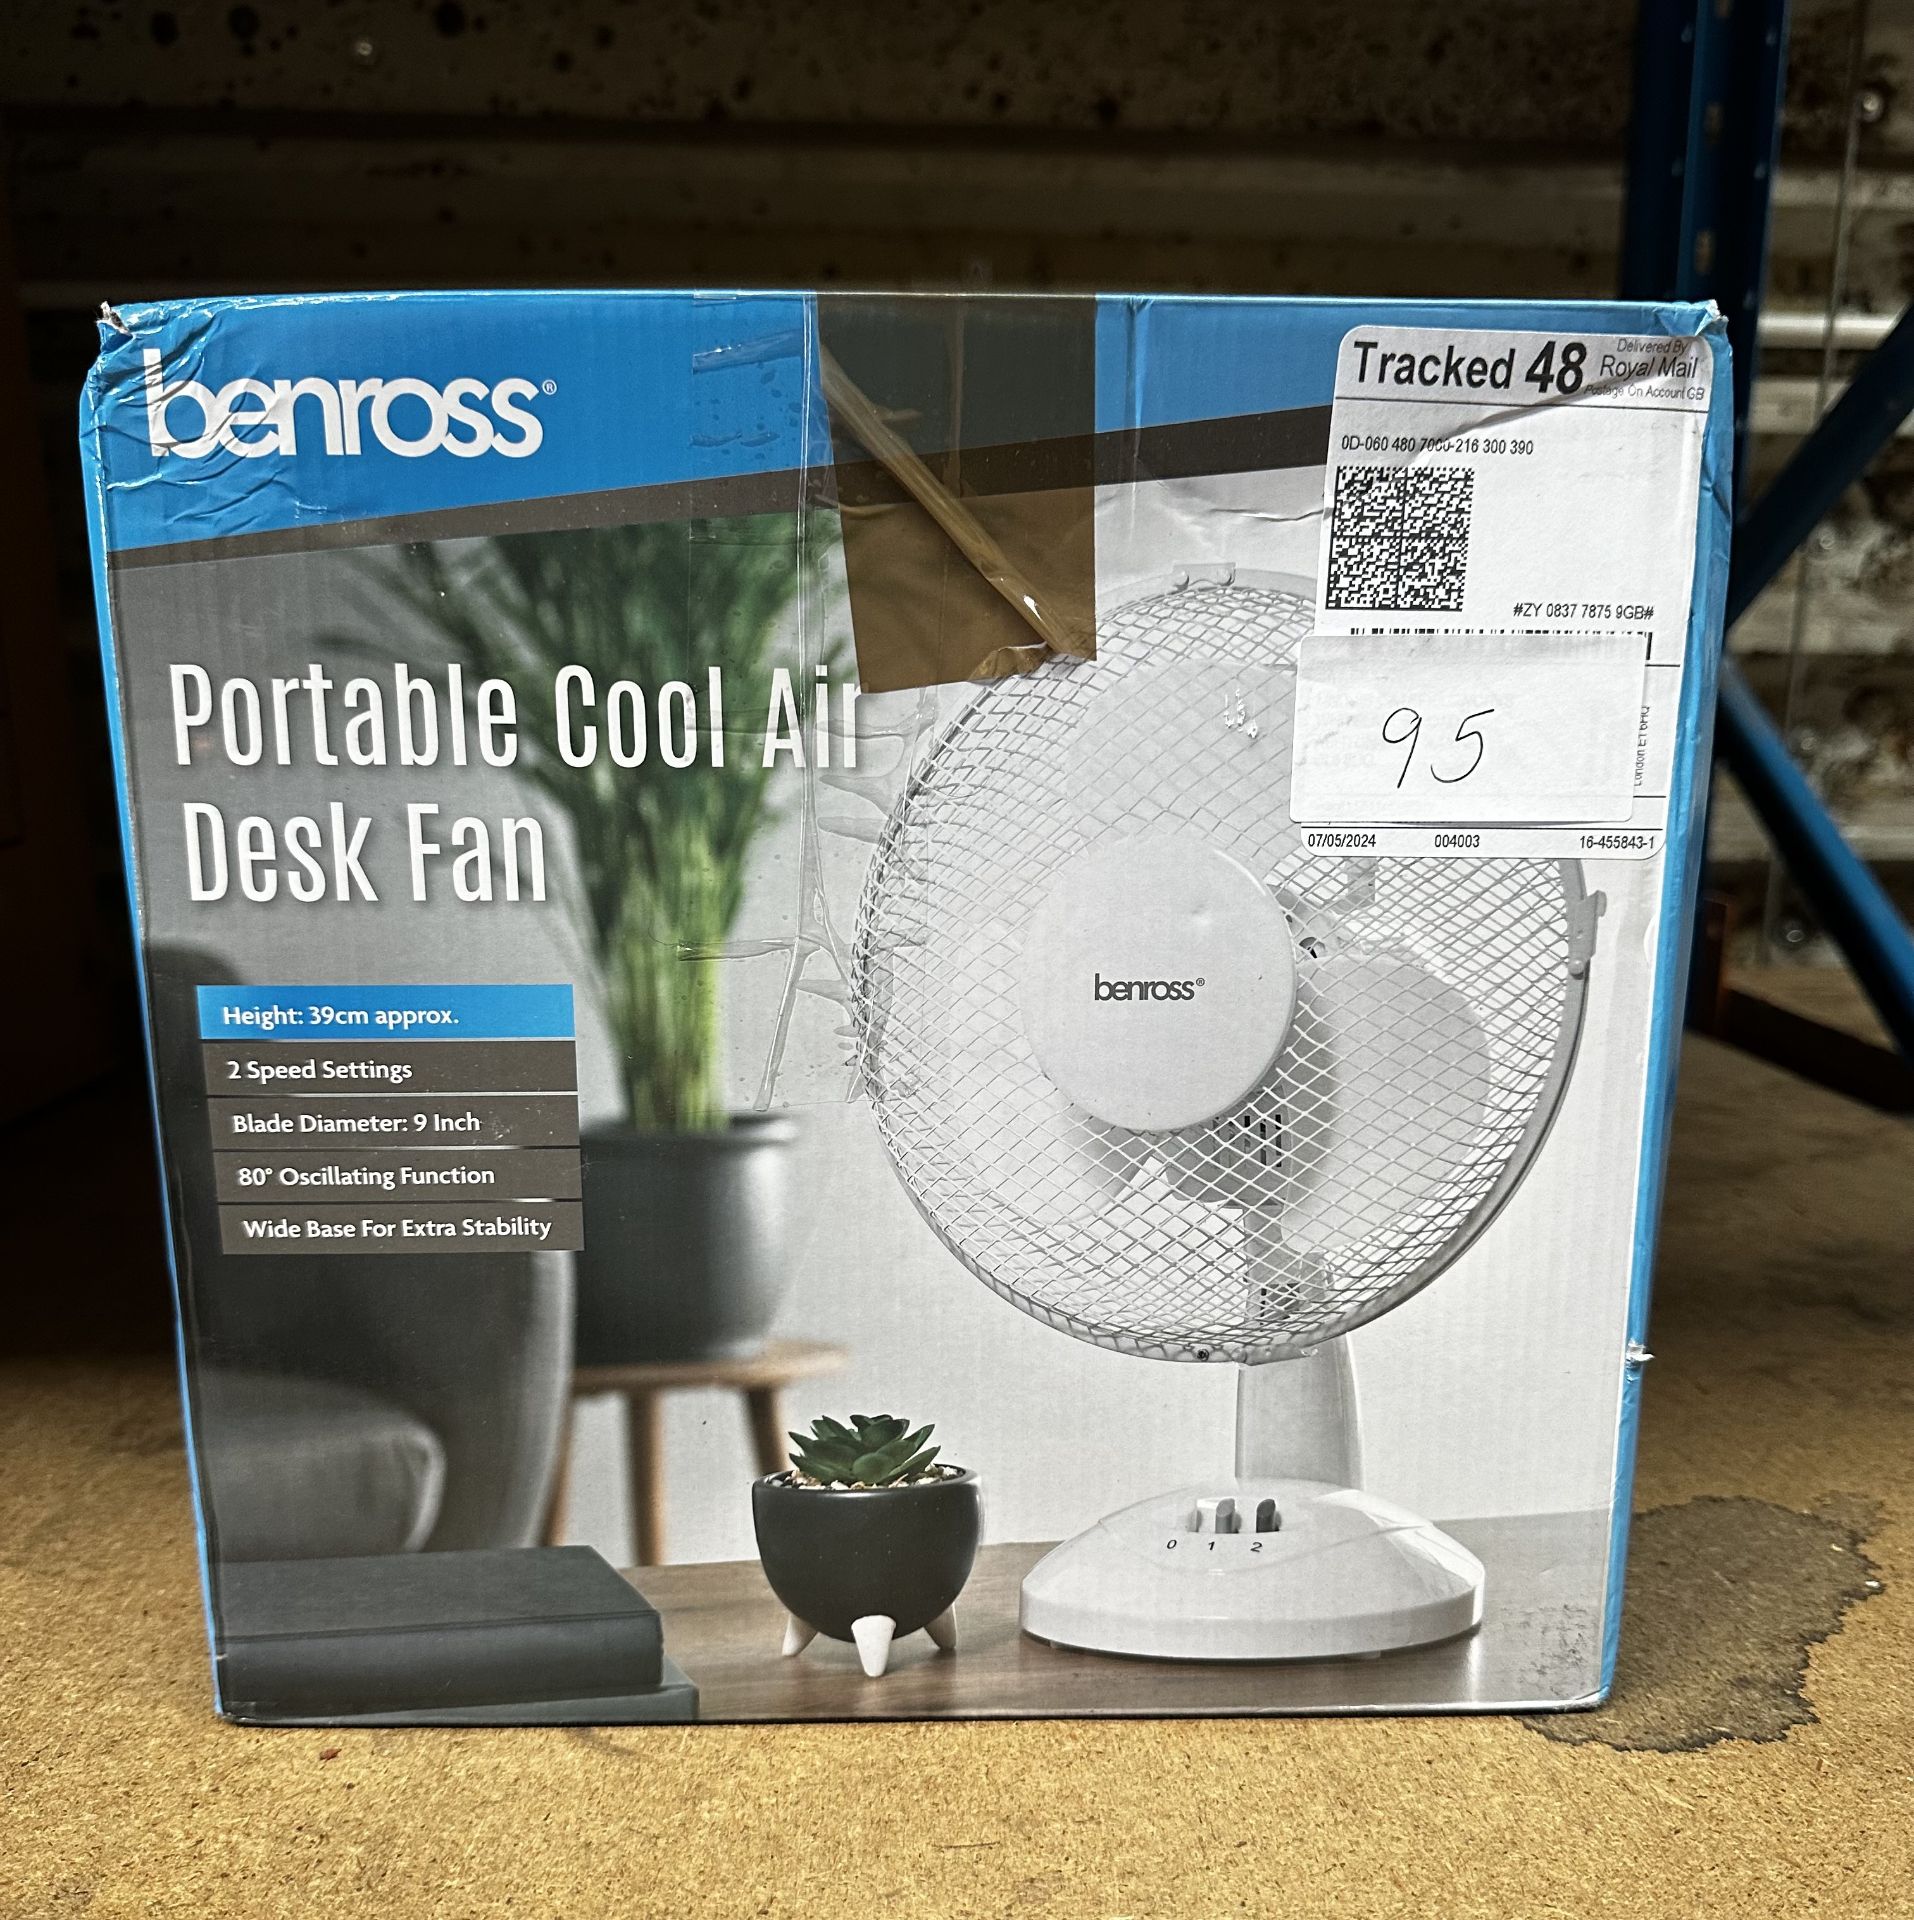 Benross Portable Cool Air Desk Fan. RRP £20 - Grade U